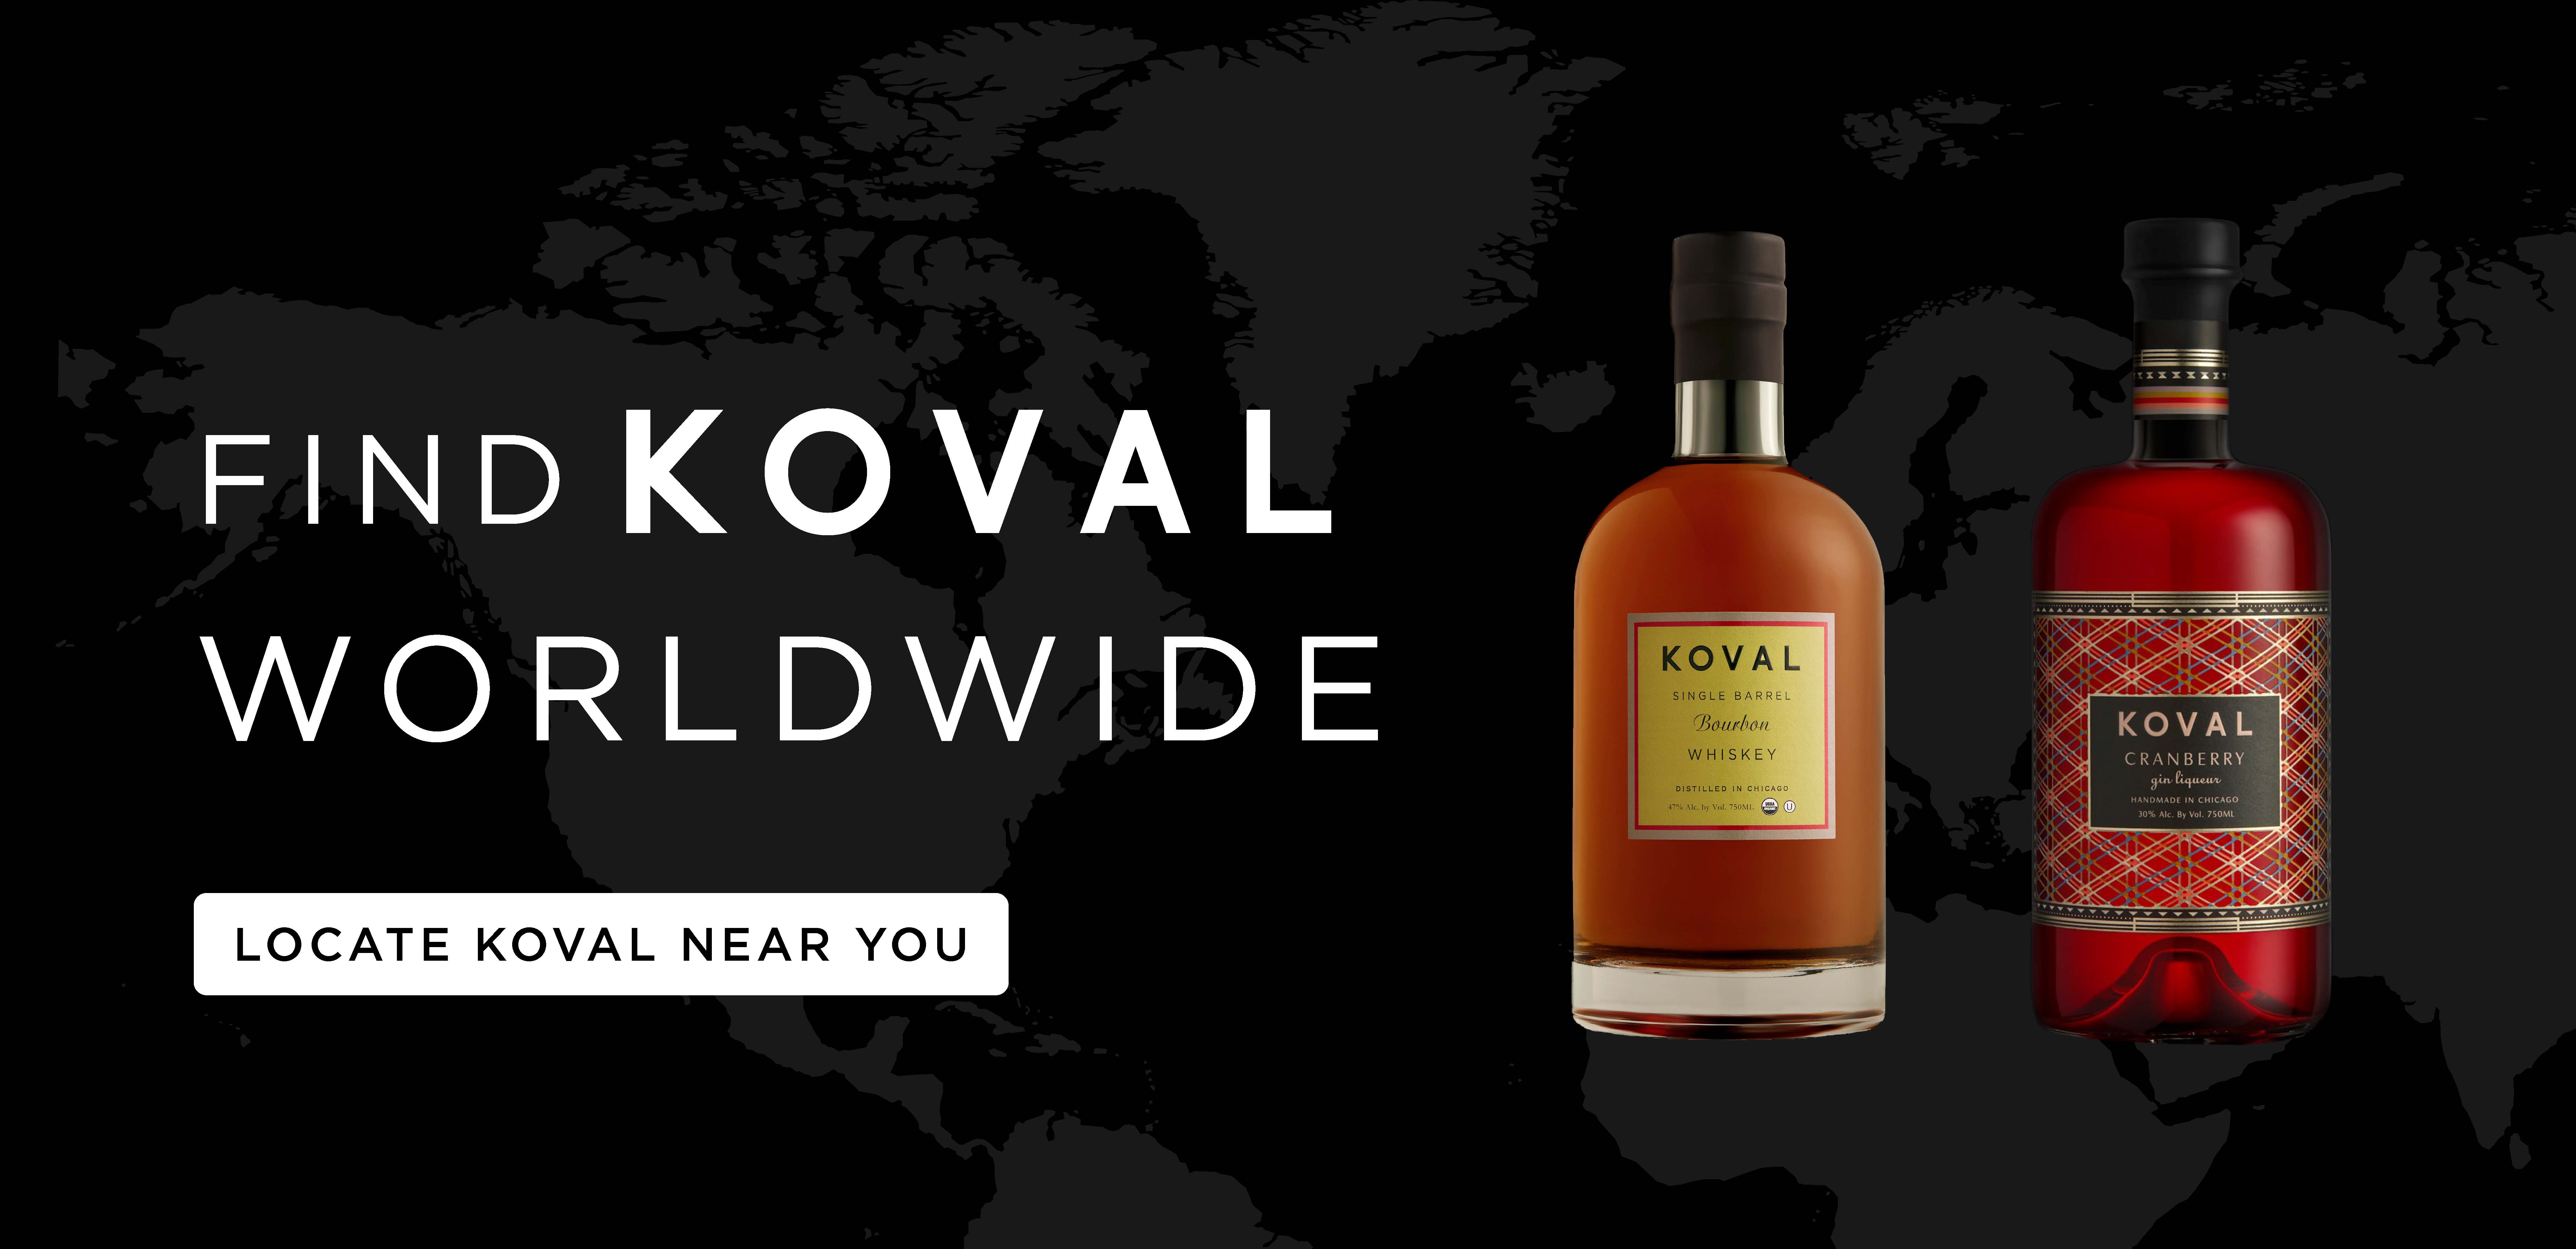 Find KOVAL Worldwide website banner